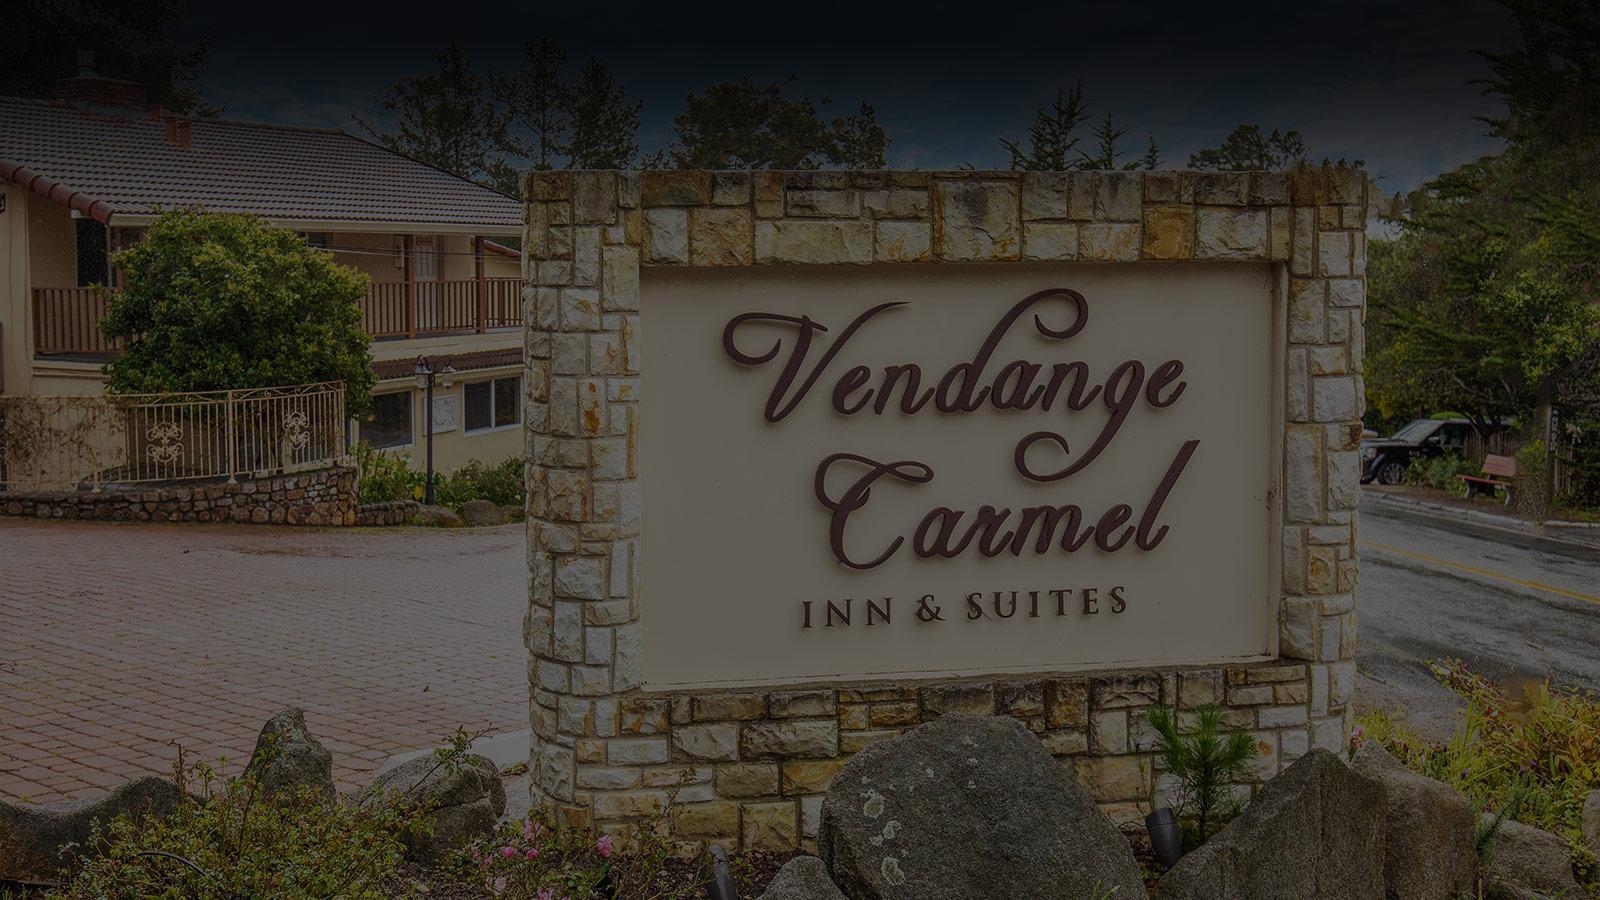 Welcome to Vendange Carmel Inn & Suites